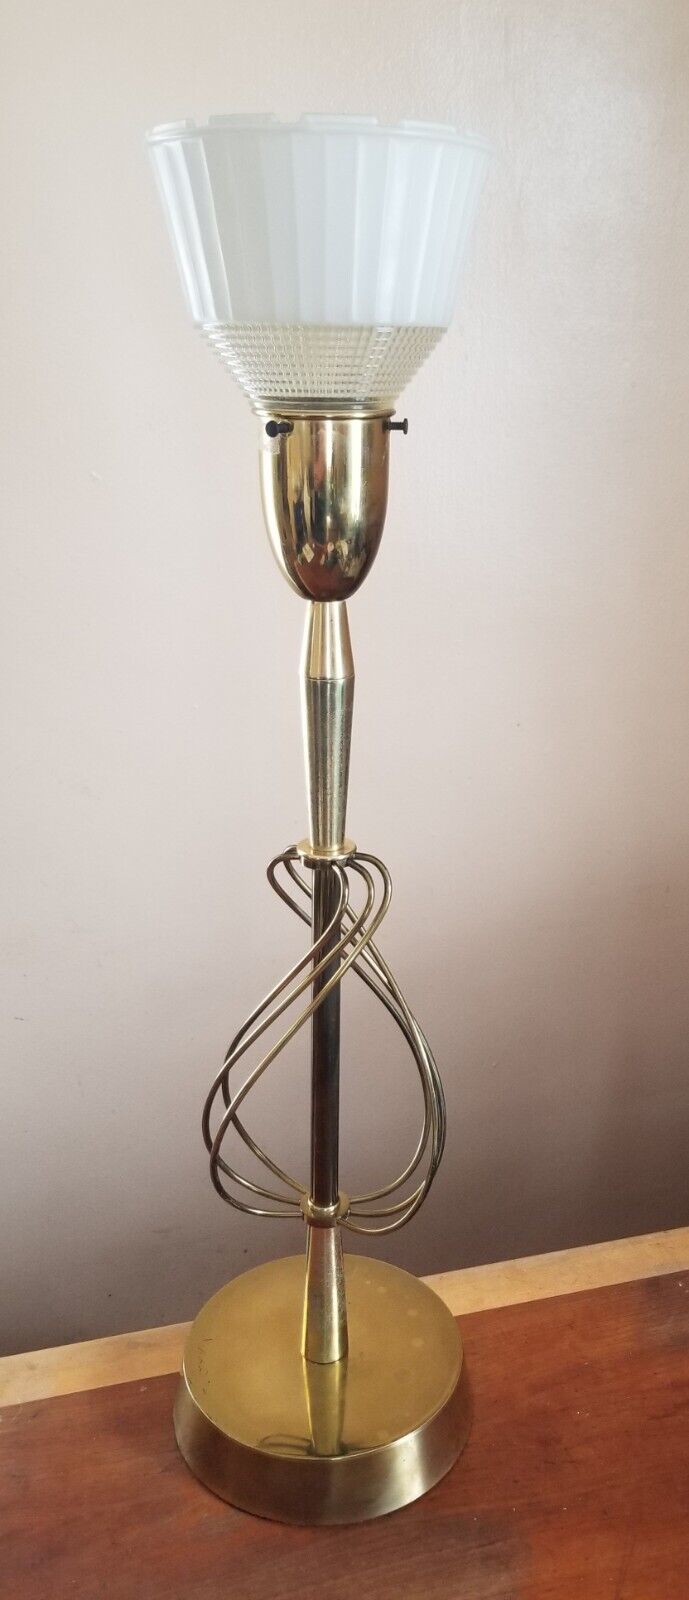 Vtg Rembrandt Sculptural Torchiere Table Lamp Brass & Glass Shade 60s Modernist 